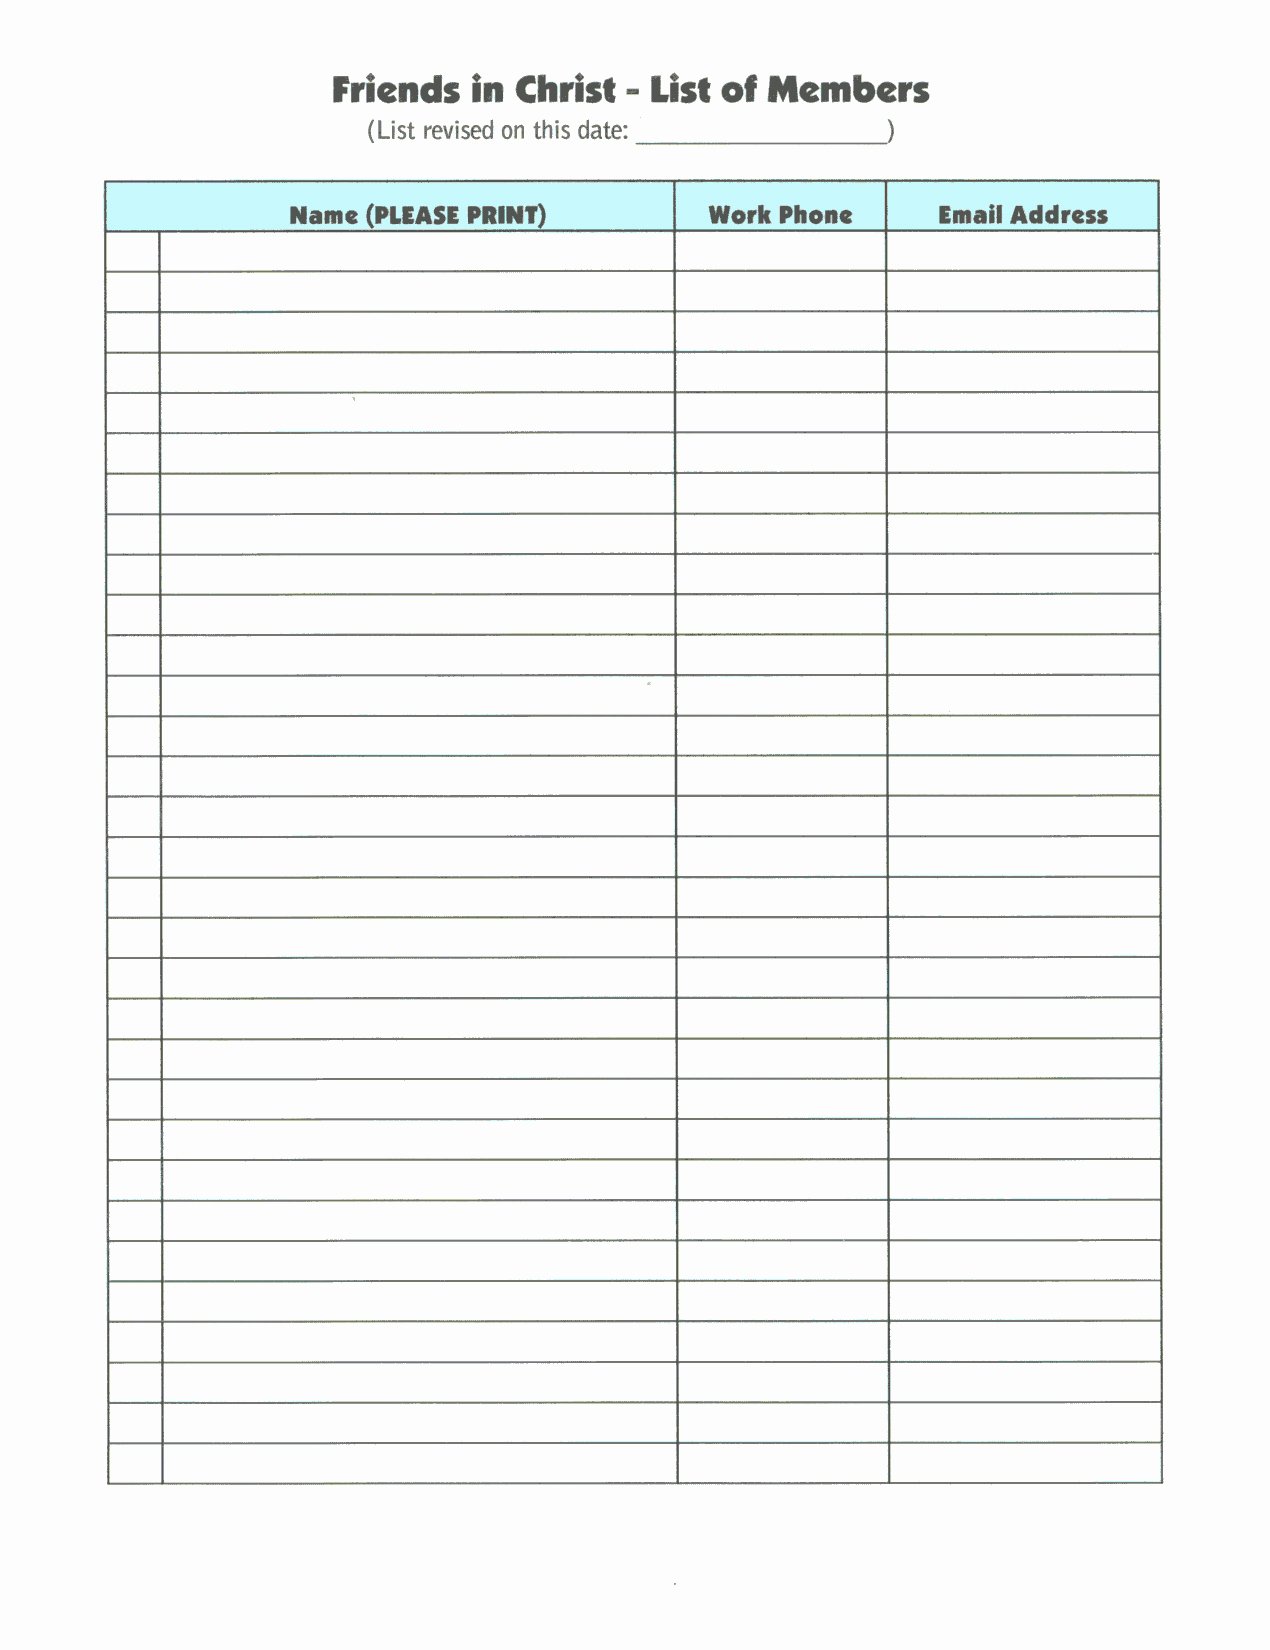 Sign Up Sheet Example Beautiful Sample Sign Up Sheet